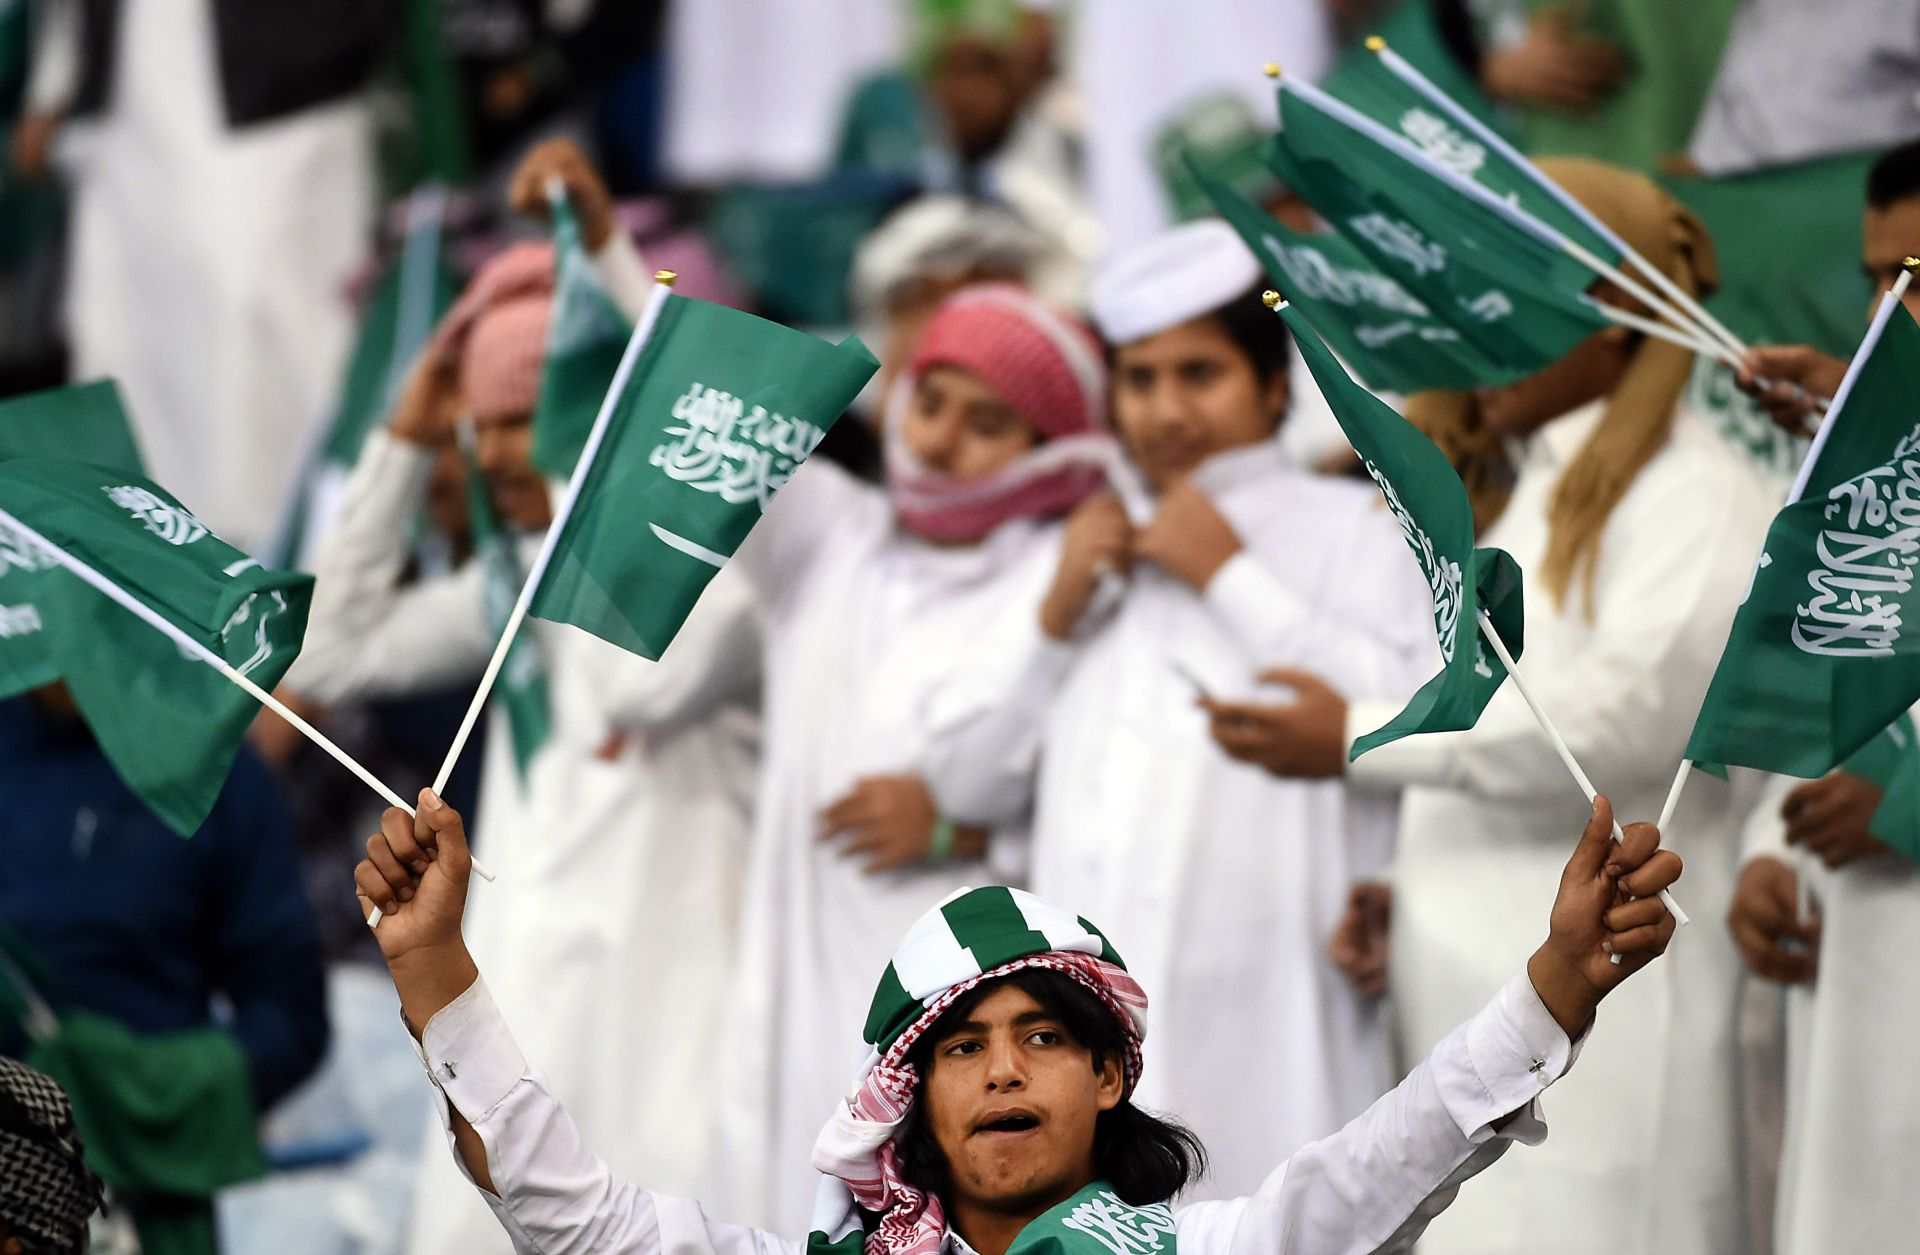 Fans of the Saudi national football team cheer during a match against Qatar at the King Fahad International Stadium in Riyadh, Saudi Arabia, on Nov. 26, 2014.